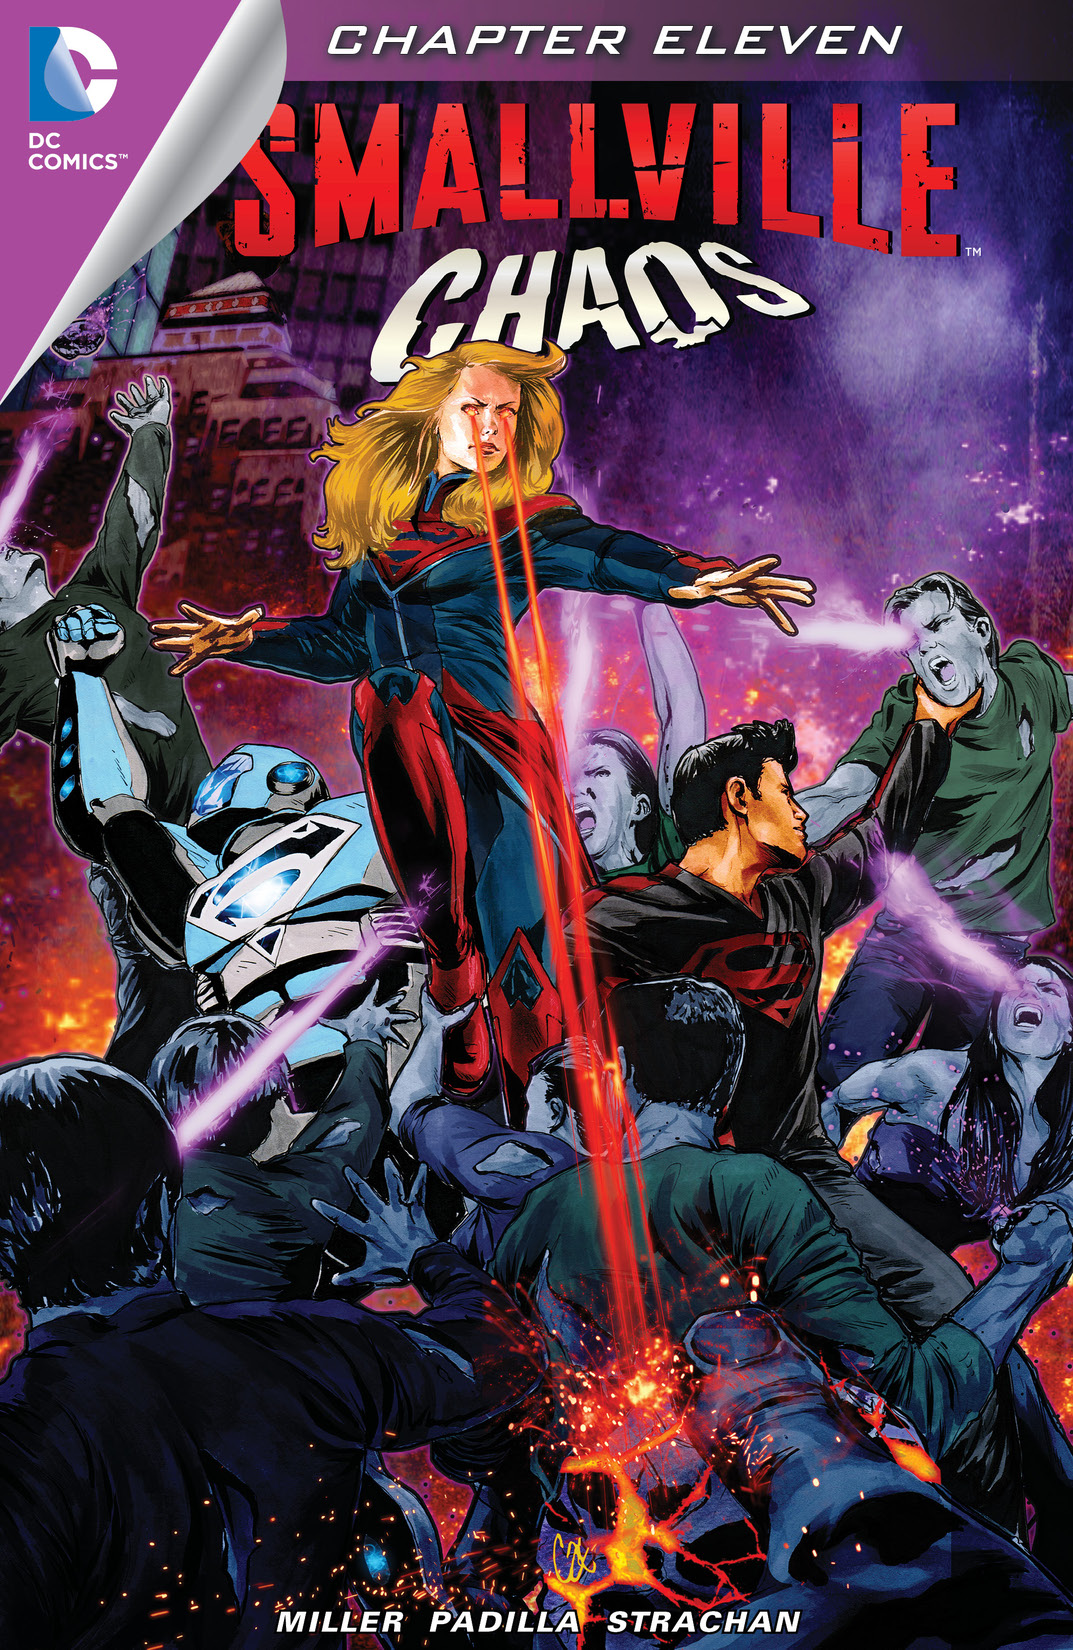 Smallville Season 11: Chaos #11 preview images